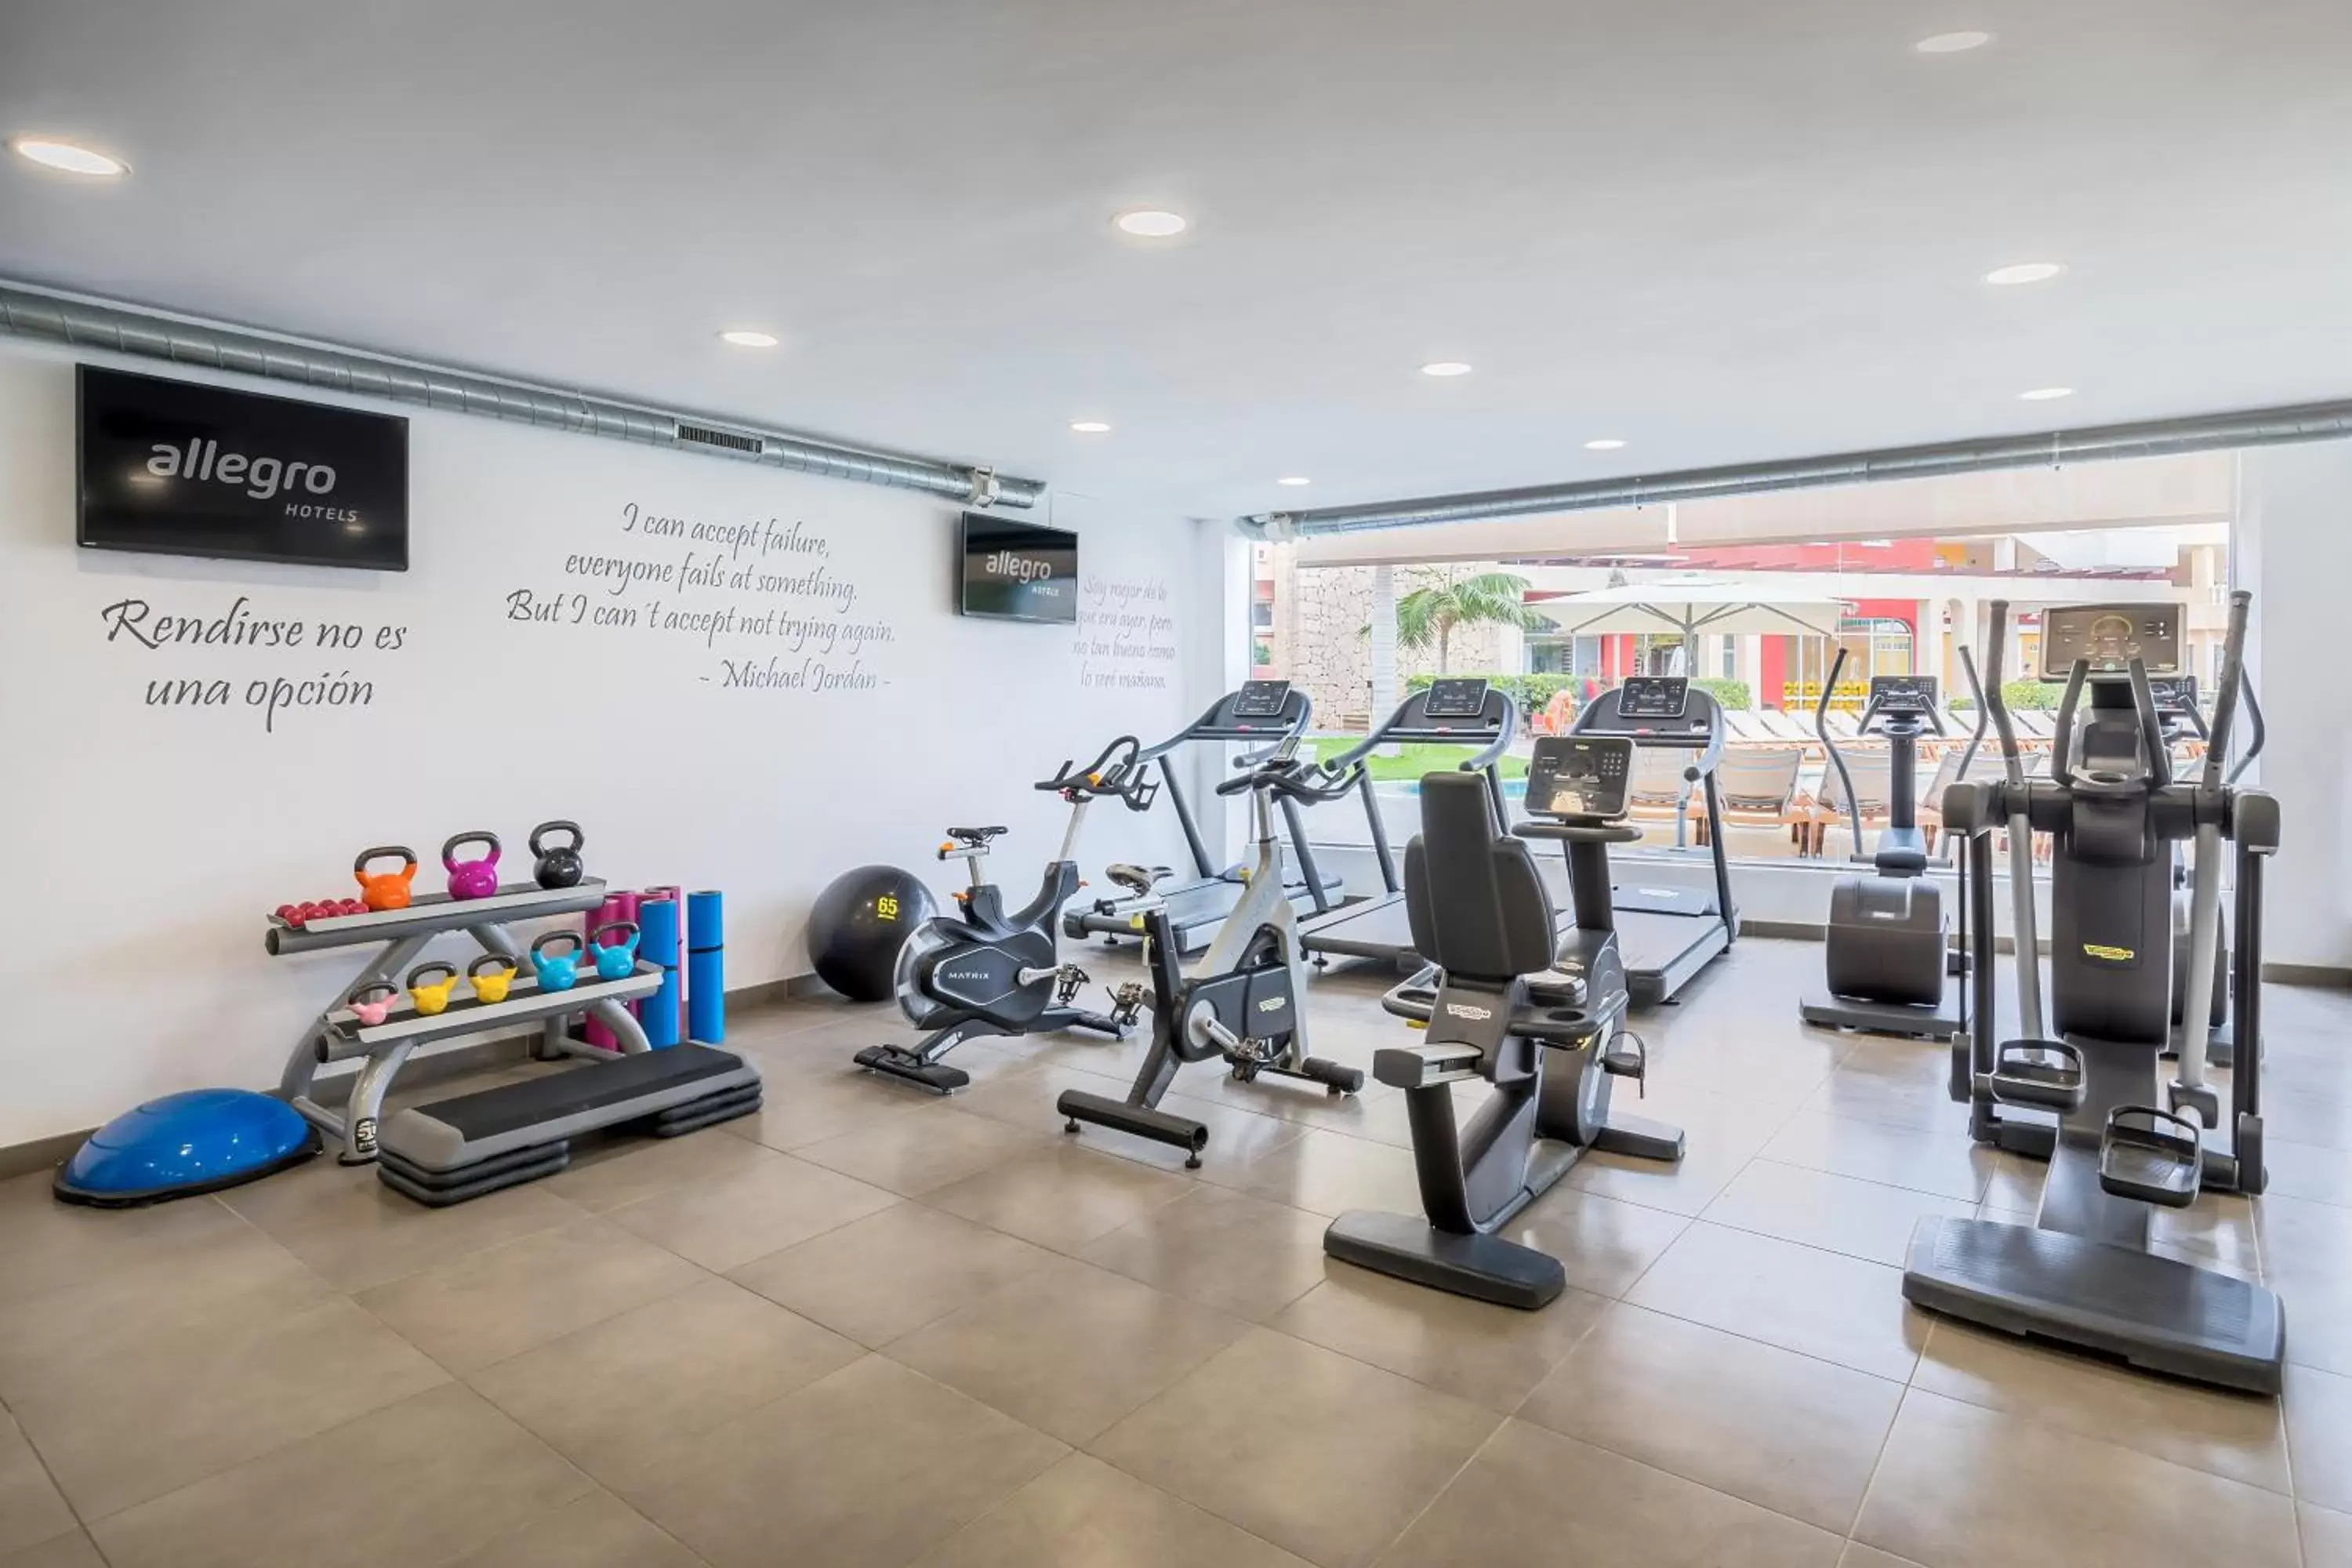 Fitness centre/facilities, Fitness Center/Facilities in Allegro Isora